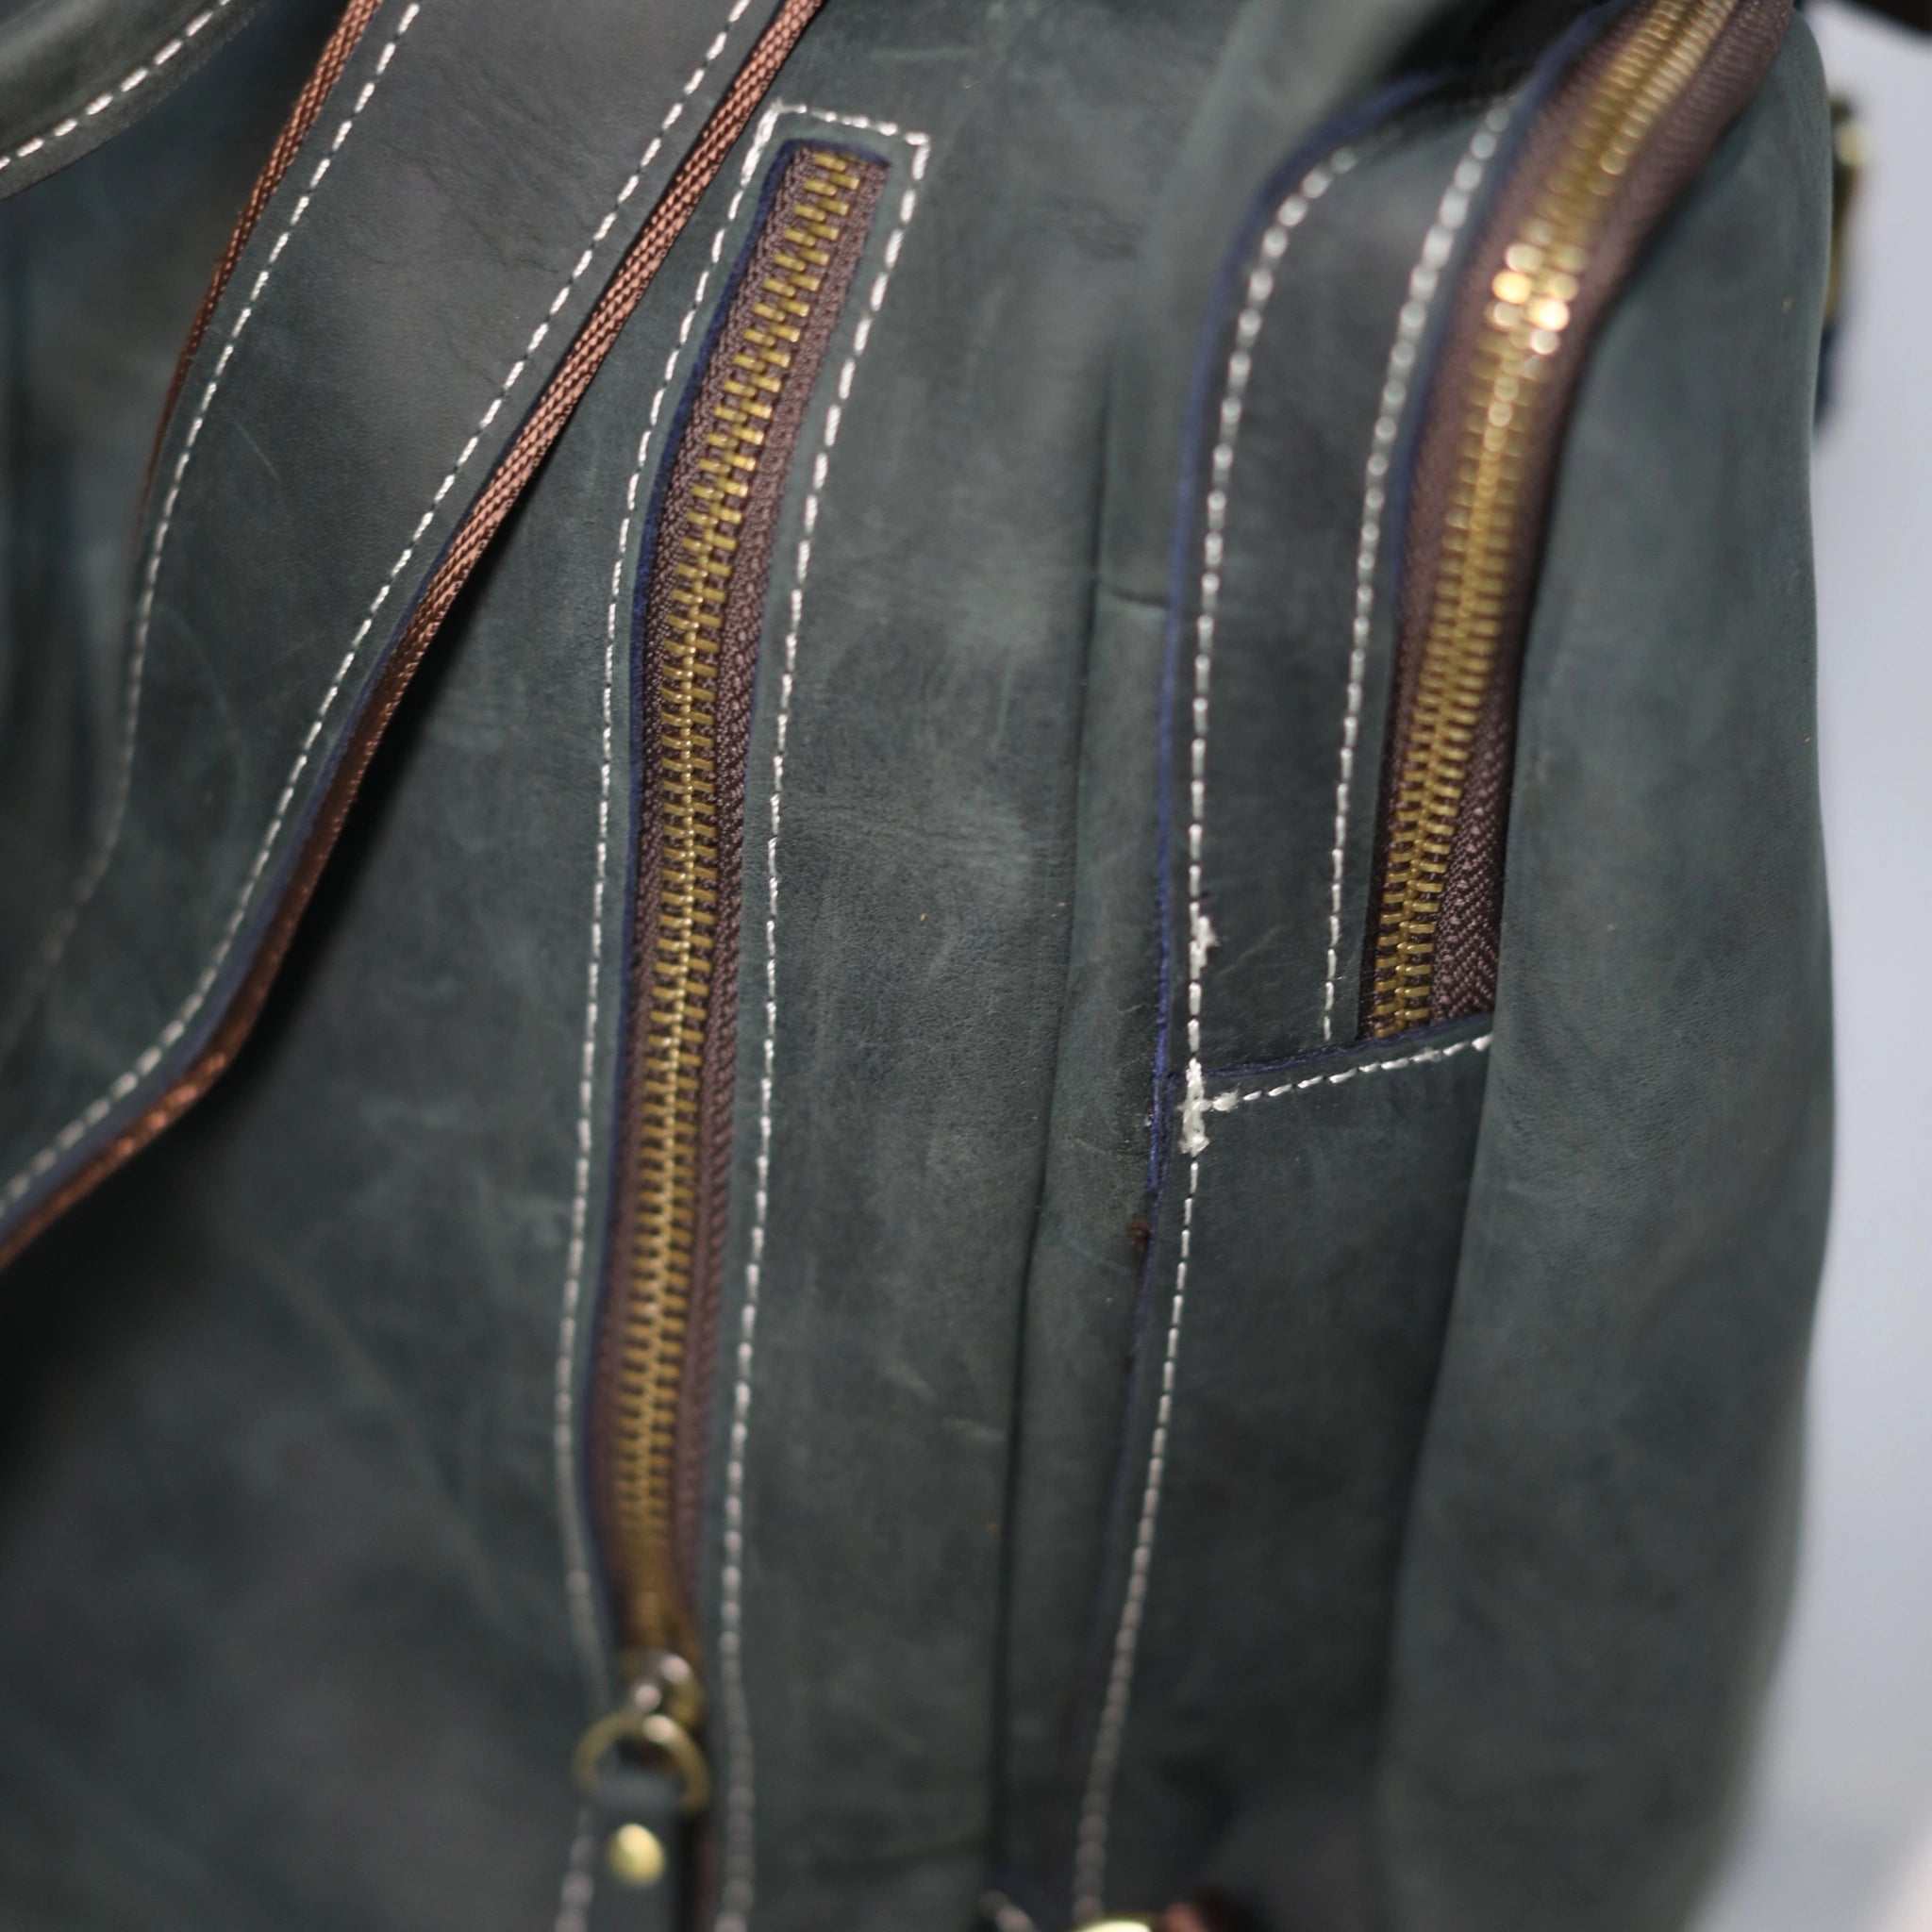 backpack zipper closeup